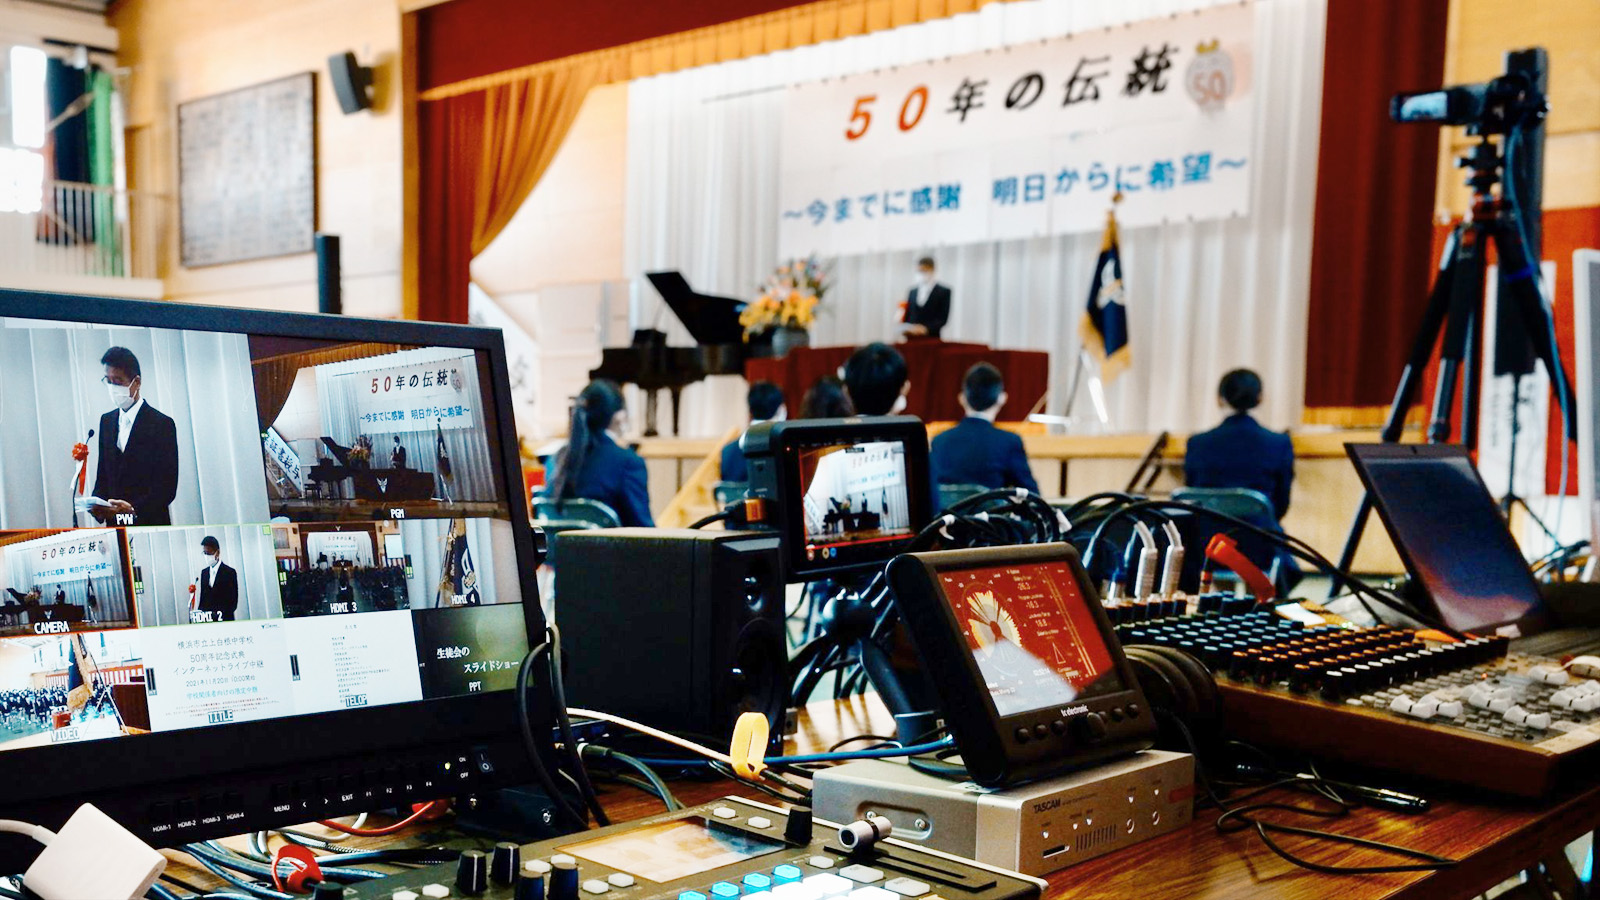 The 50th Anniversary Ceremony at Kamishirane Junior High School in Yokohama City